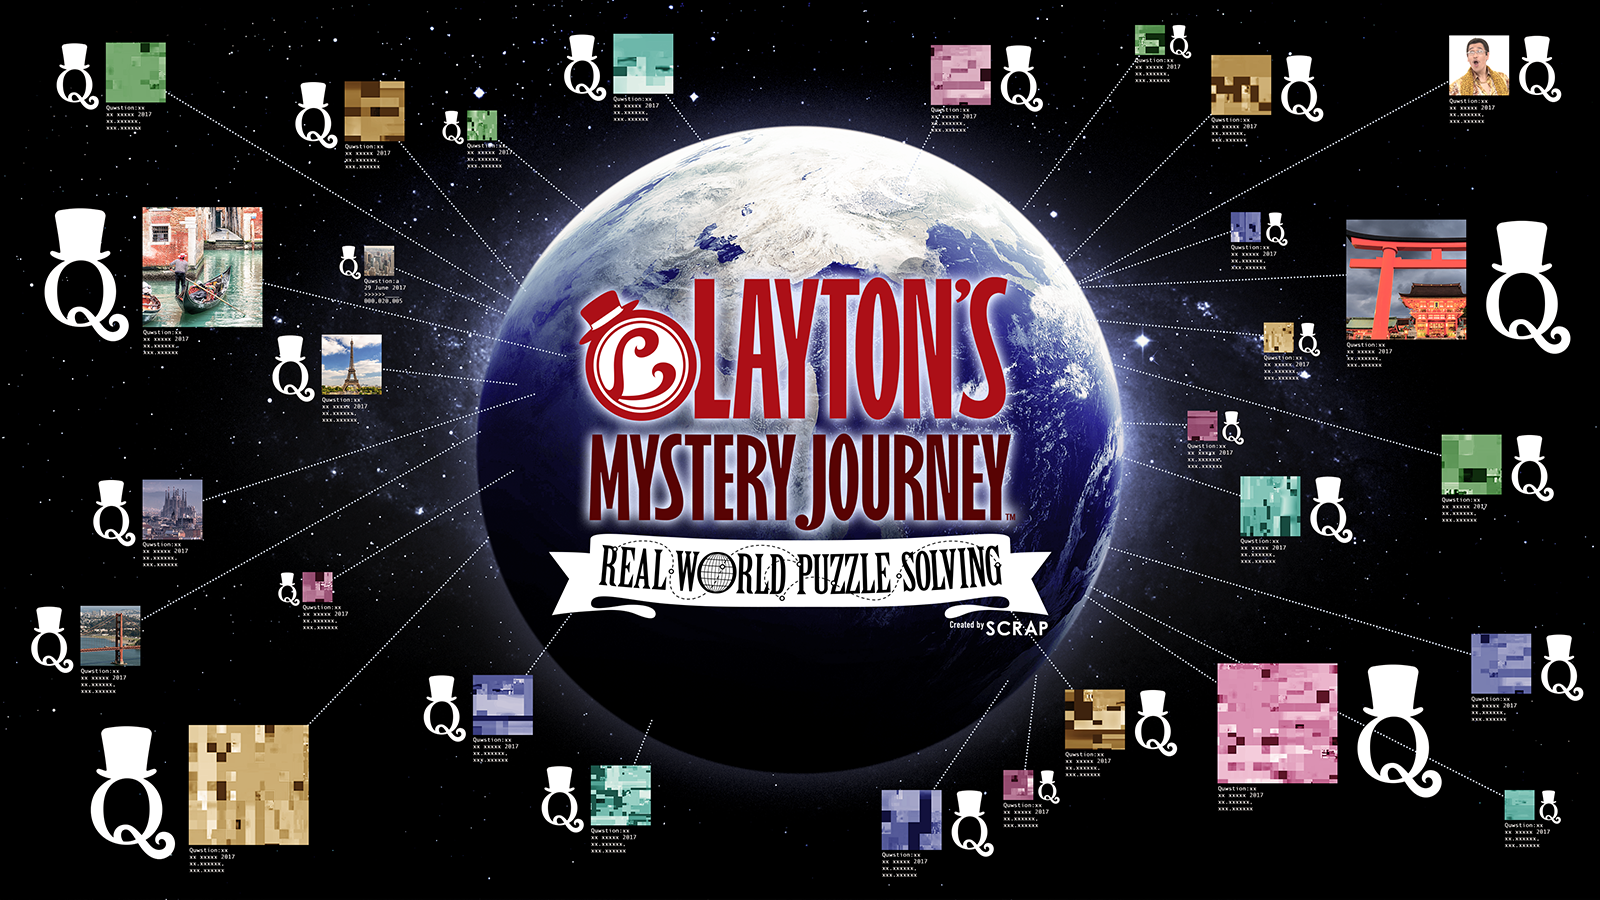 Laytons Mystery Journey image 1